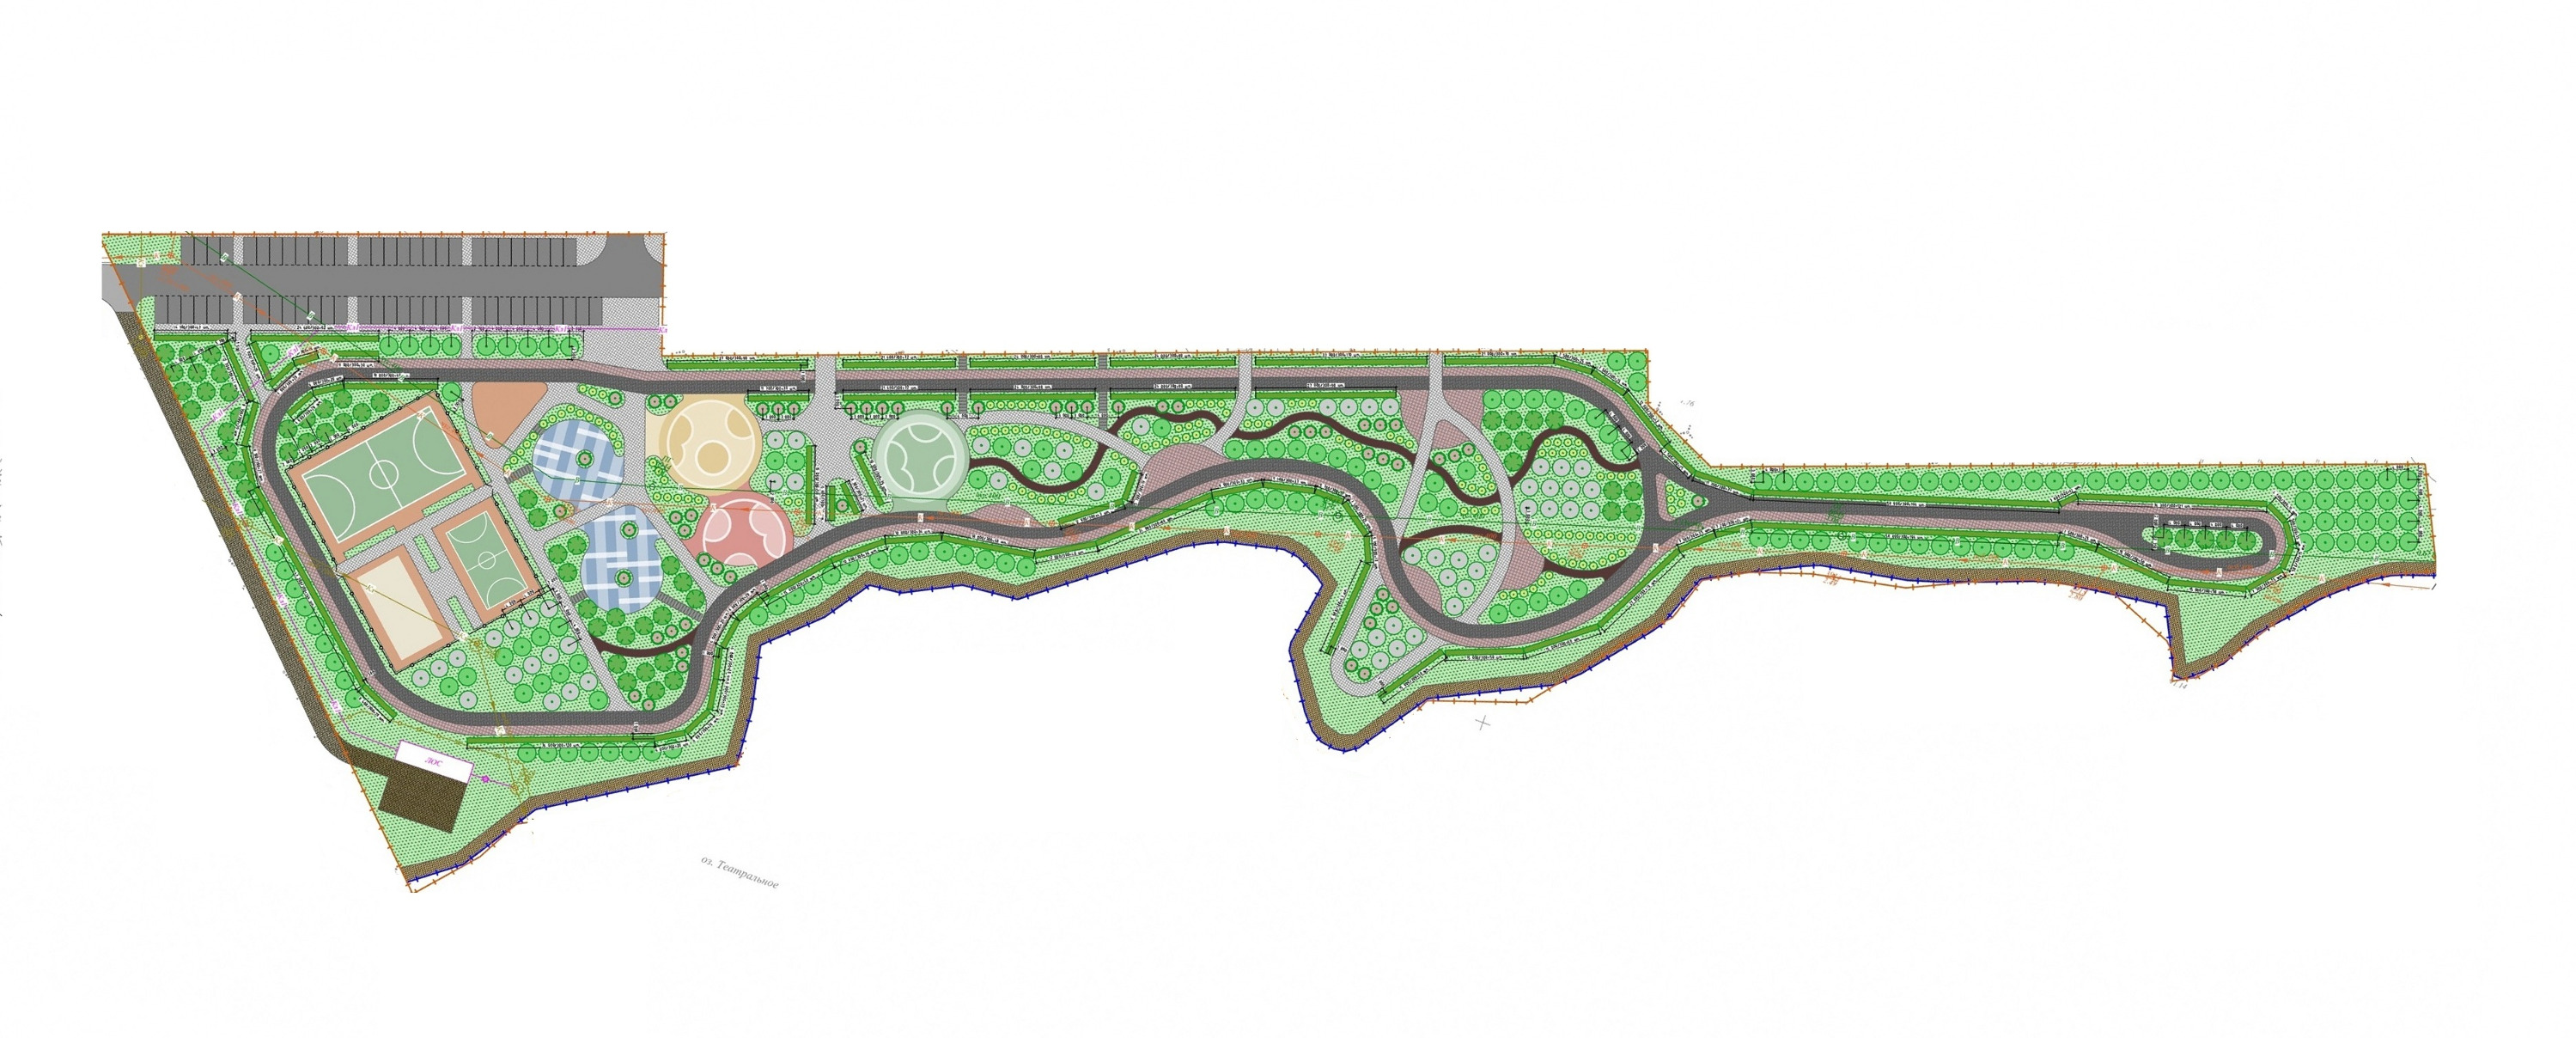 Схема будущего парка